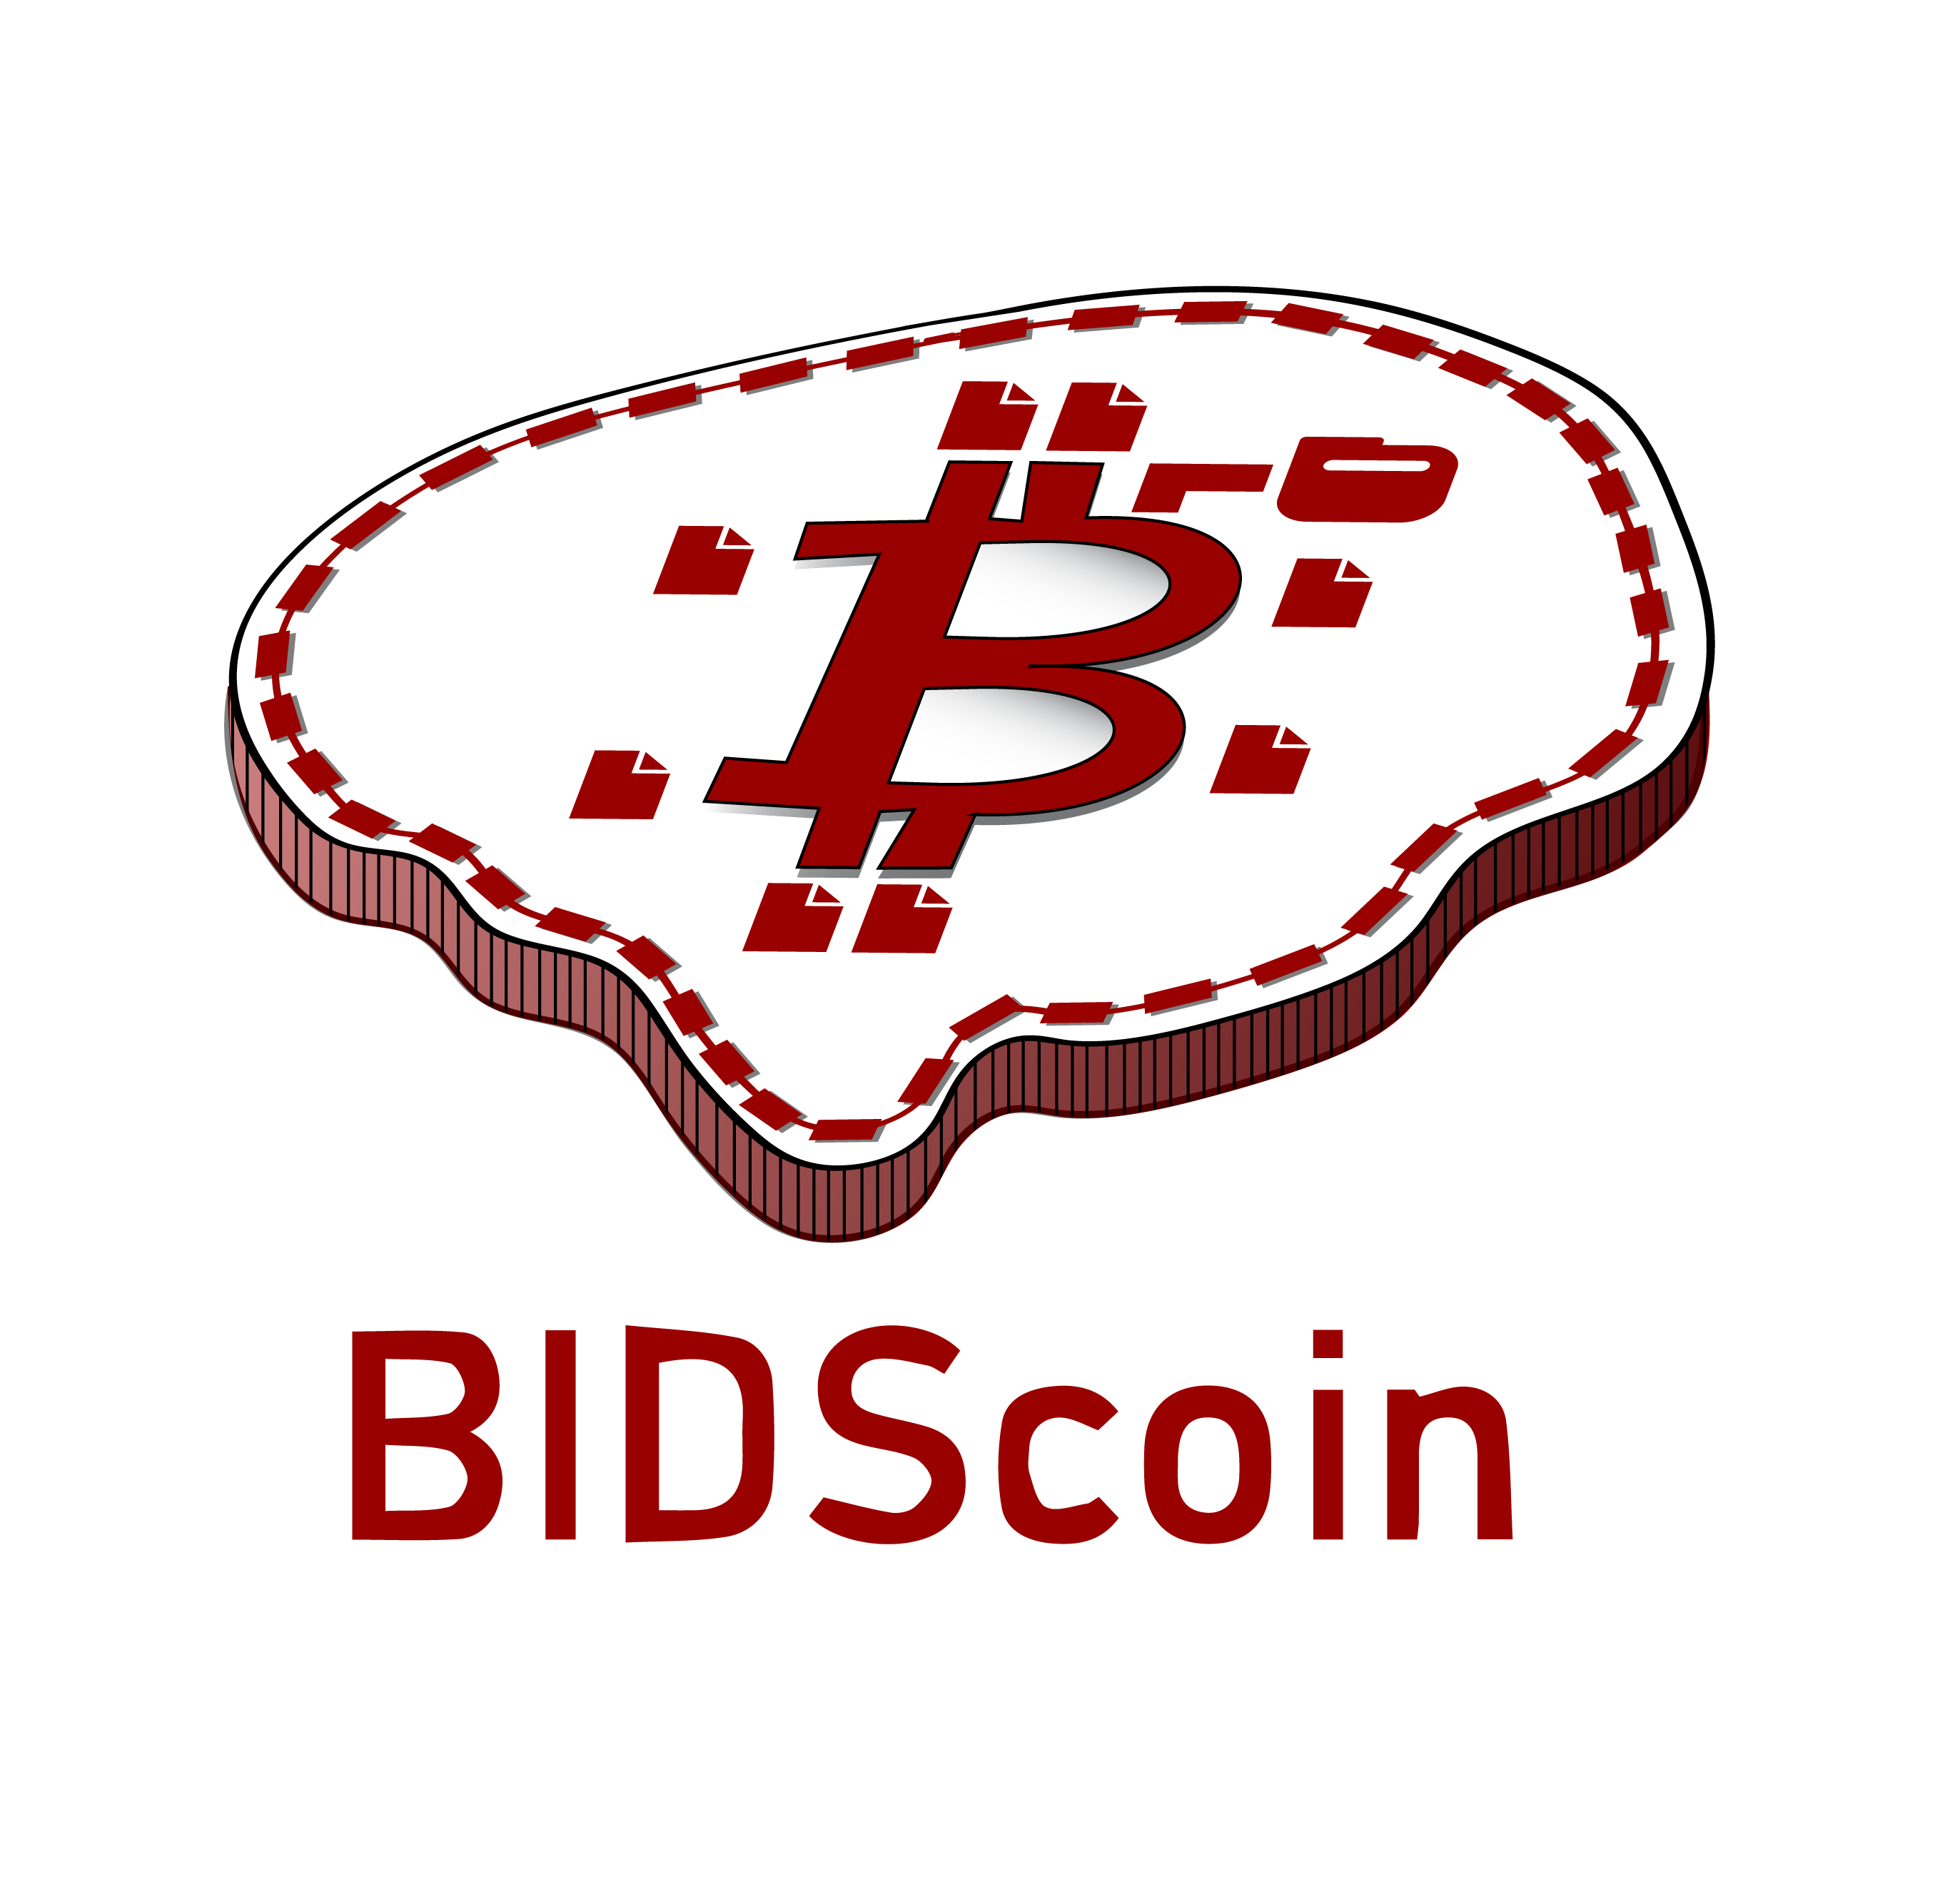 Full documentation: https://bidscoin.readthedocs.io